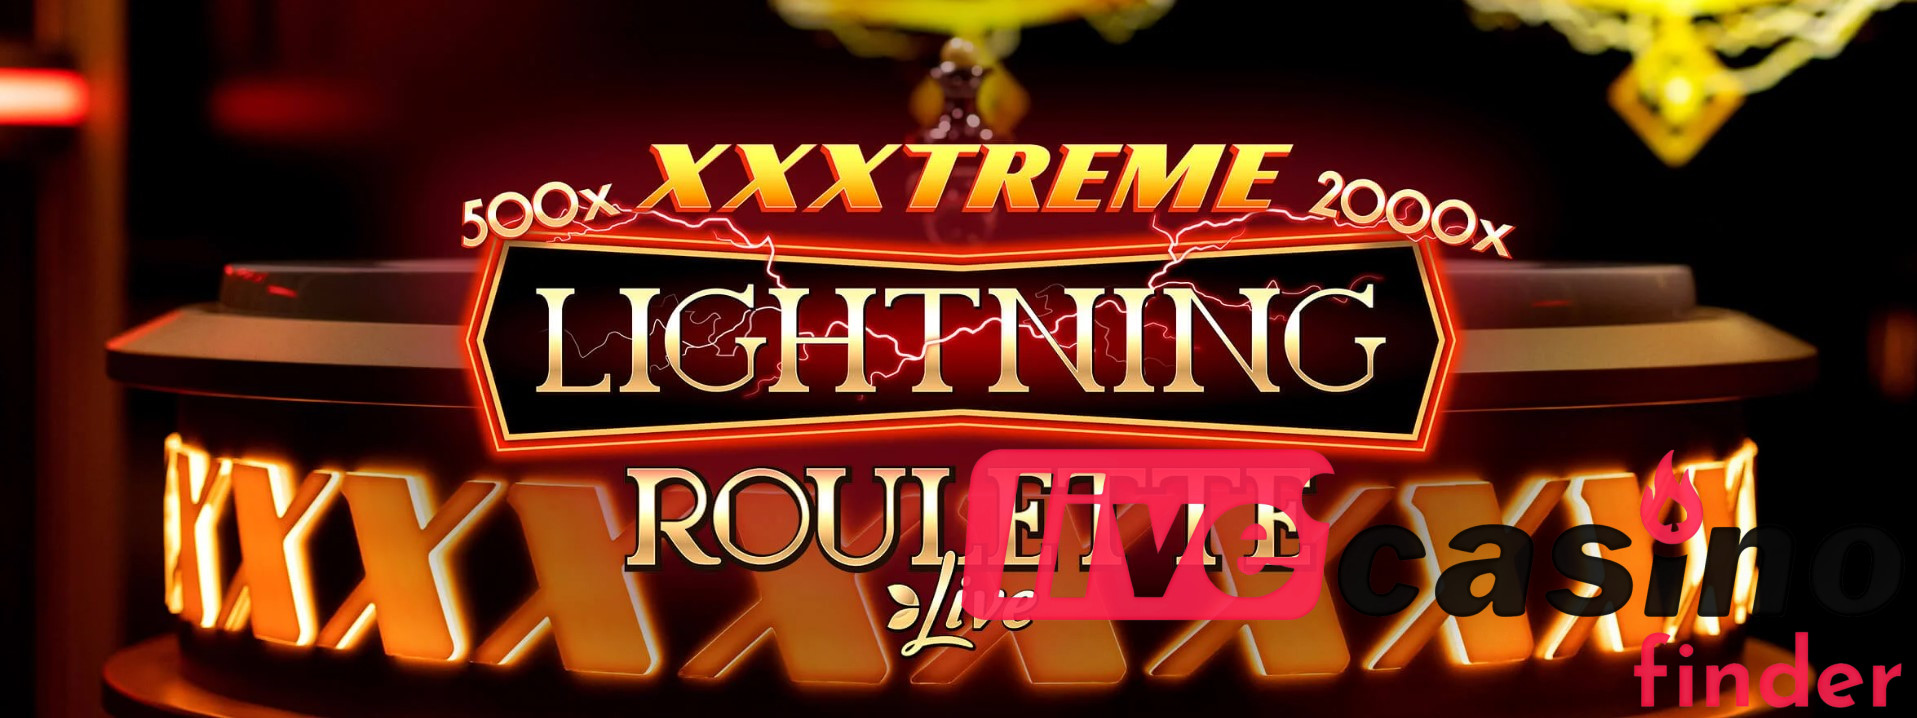 Gra XXXTreme Lightning Roulette na żywo.